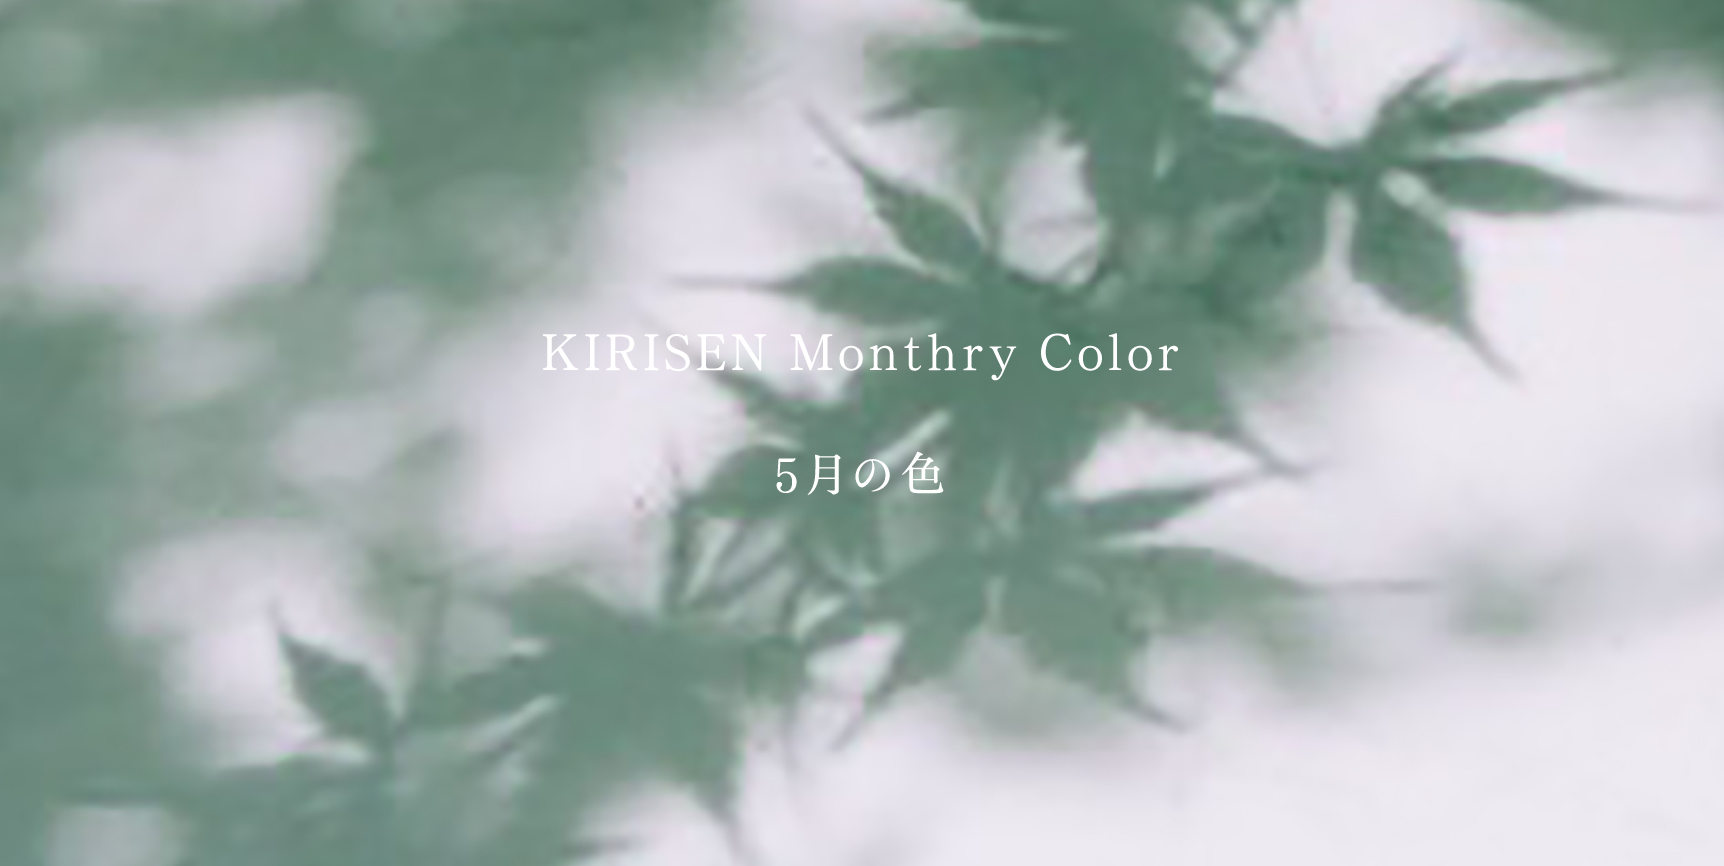 【KIRISEN Monthly Color】5月の色は若草色